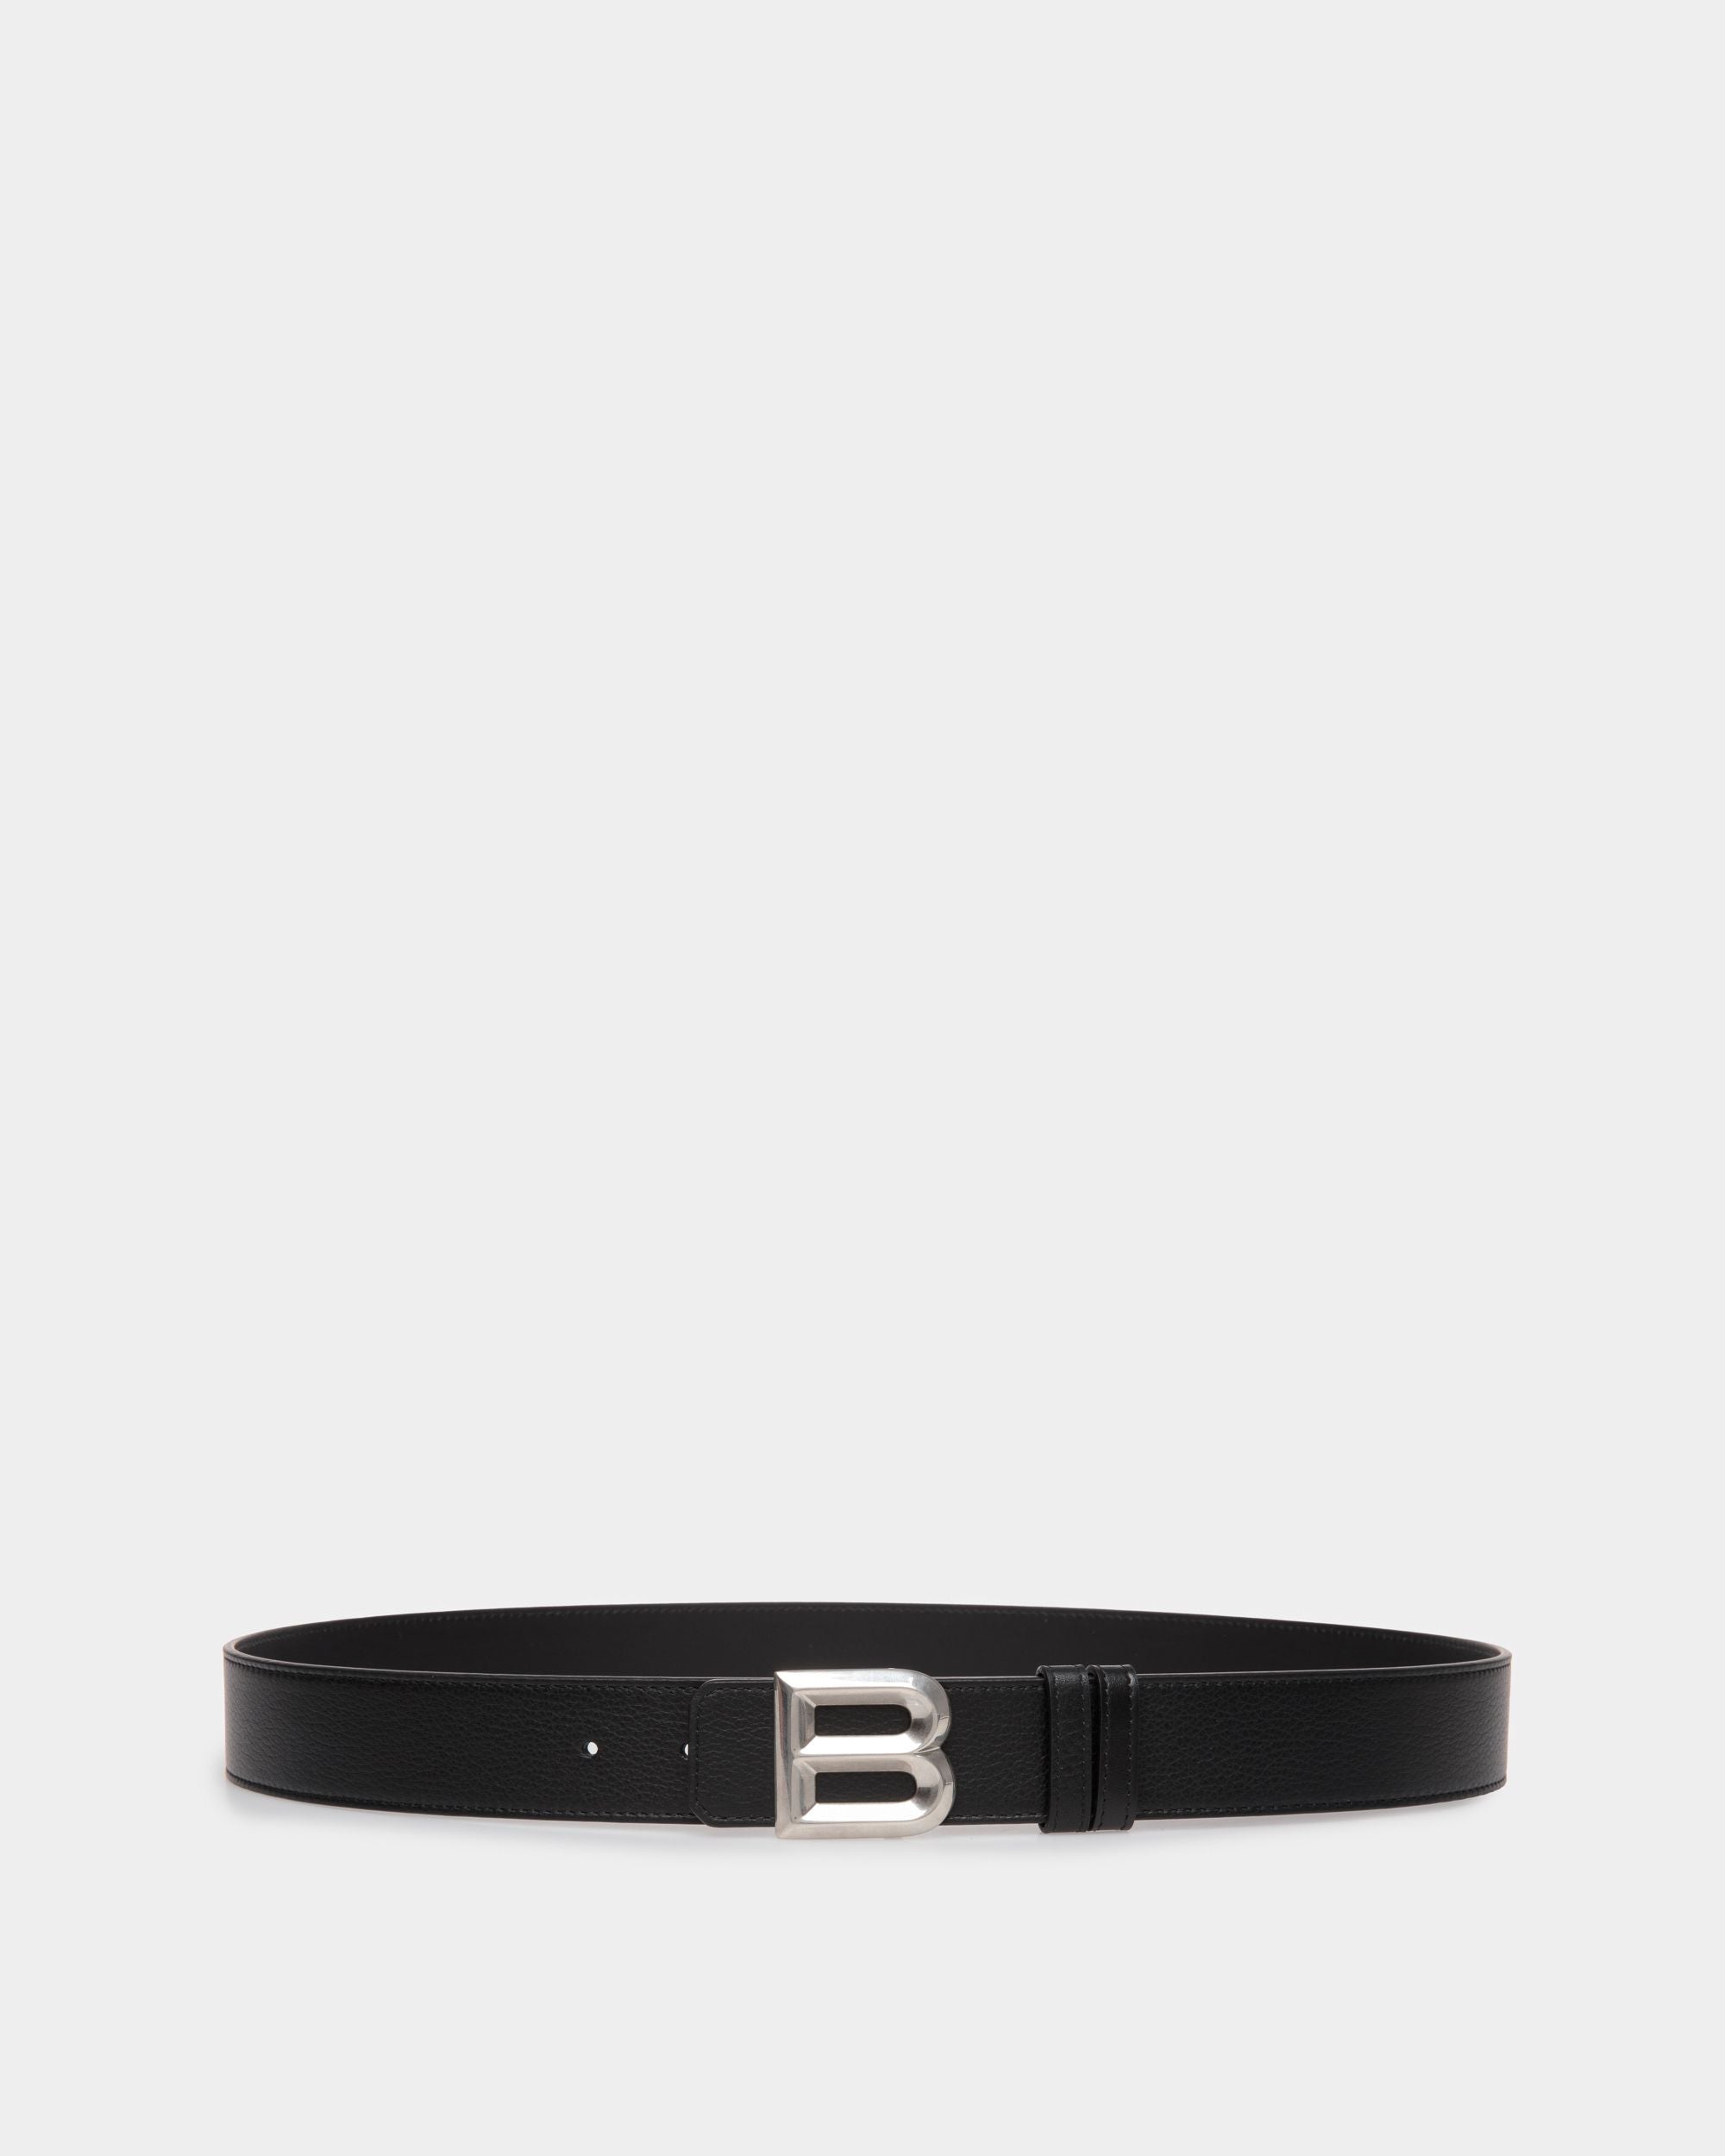 B Bold 35mm Belt | Men's Belt | Black Leather | Bally | Still Life Front